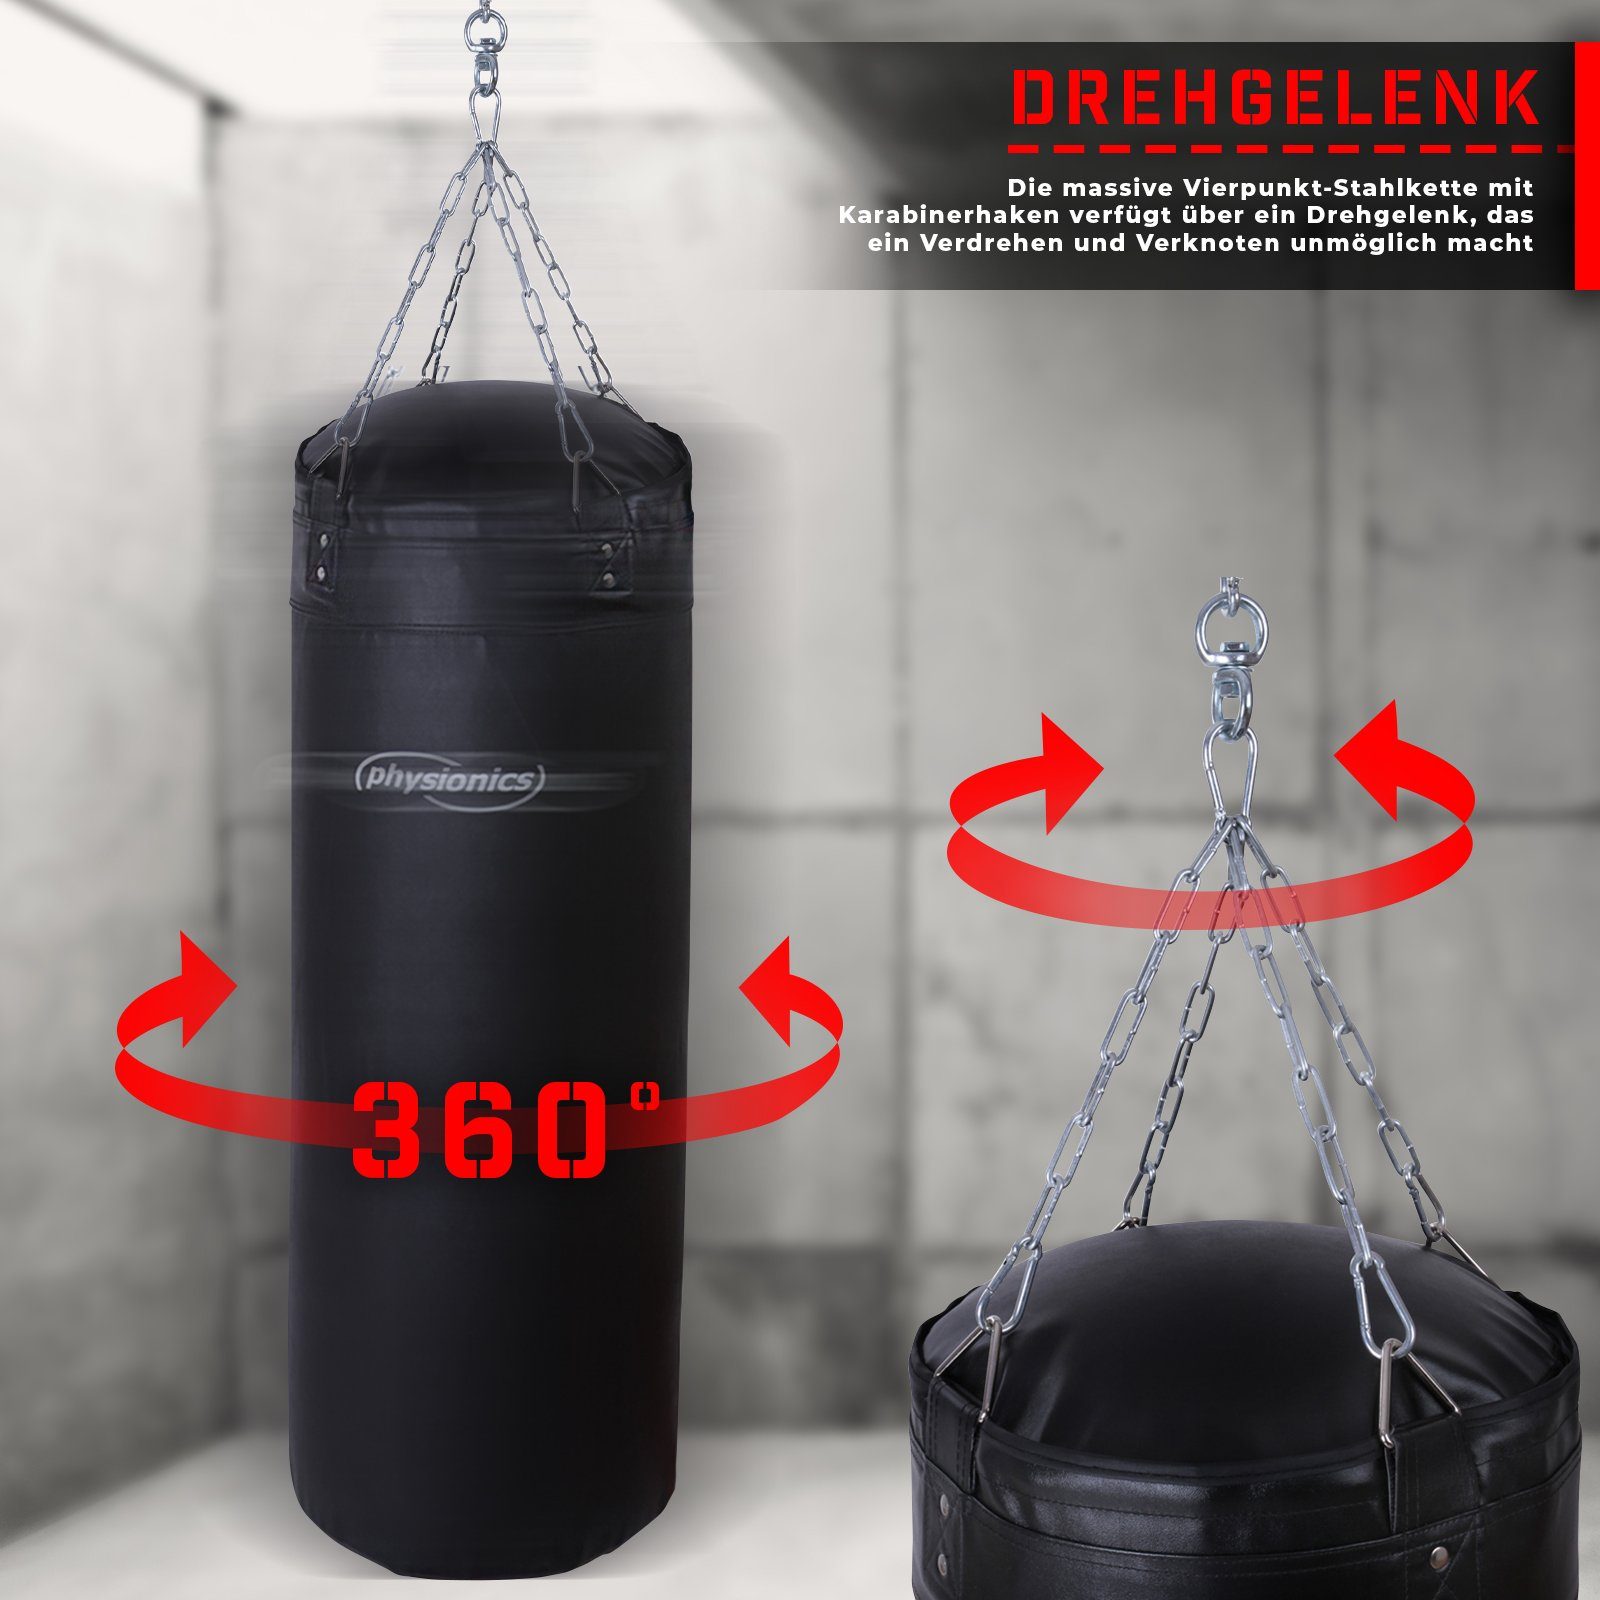 30kg 120cm Halterung Gefüllt Sandsack Punching Erwachsene Bag Boxsack Physionics